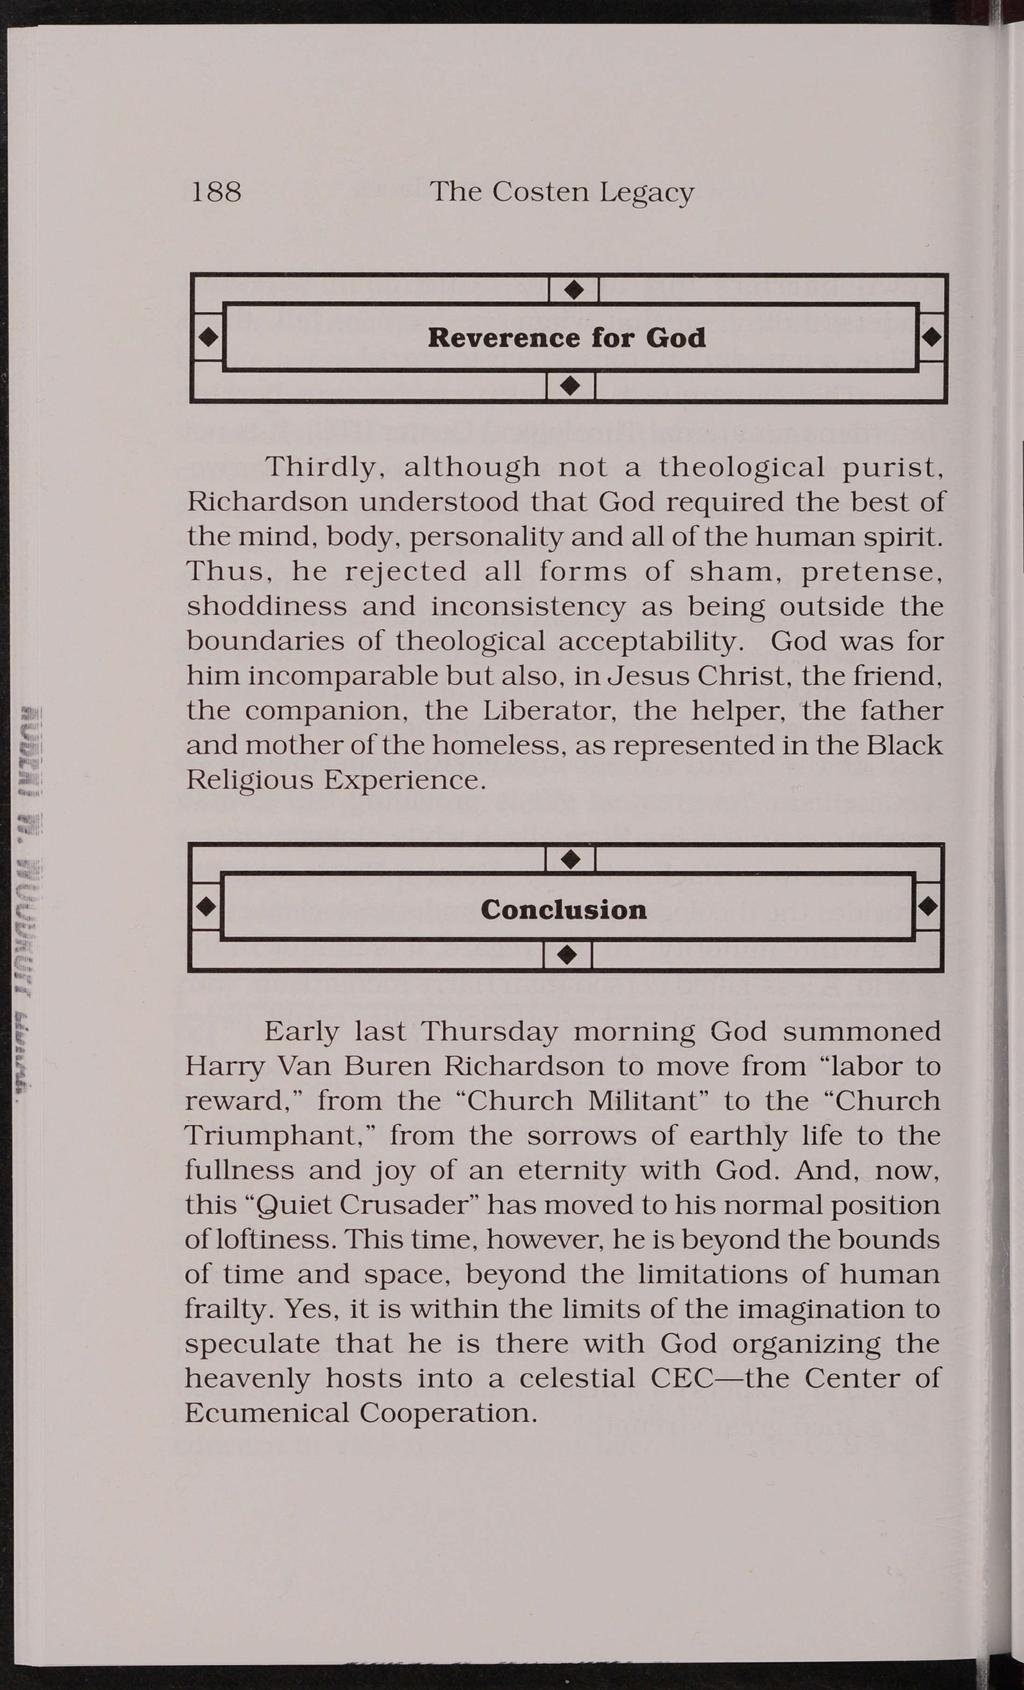 Journal of the Interdenominational Theological Center, Vol. 24 [1996], Iss. 1, Art.